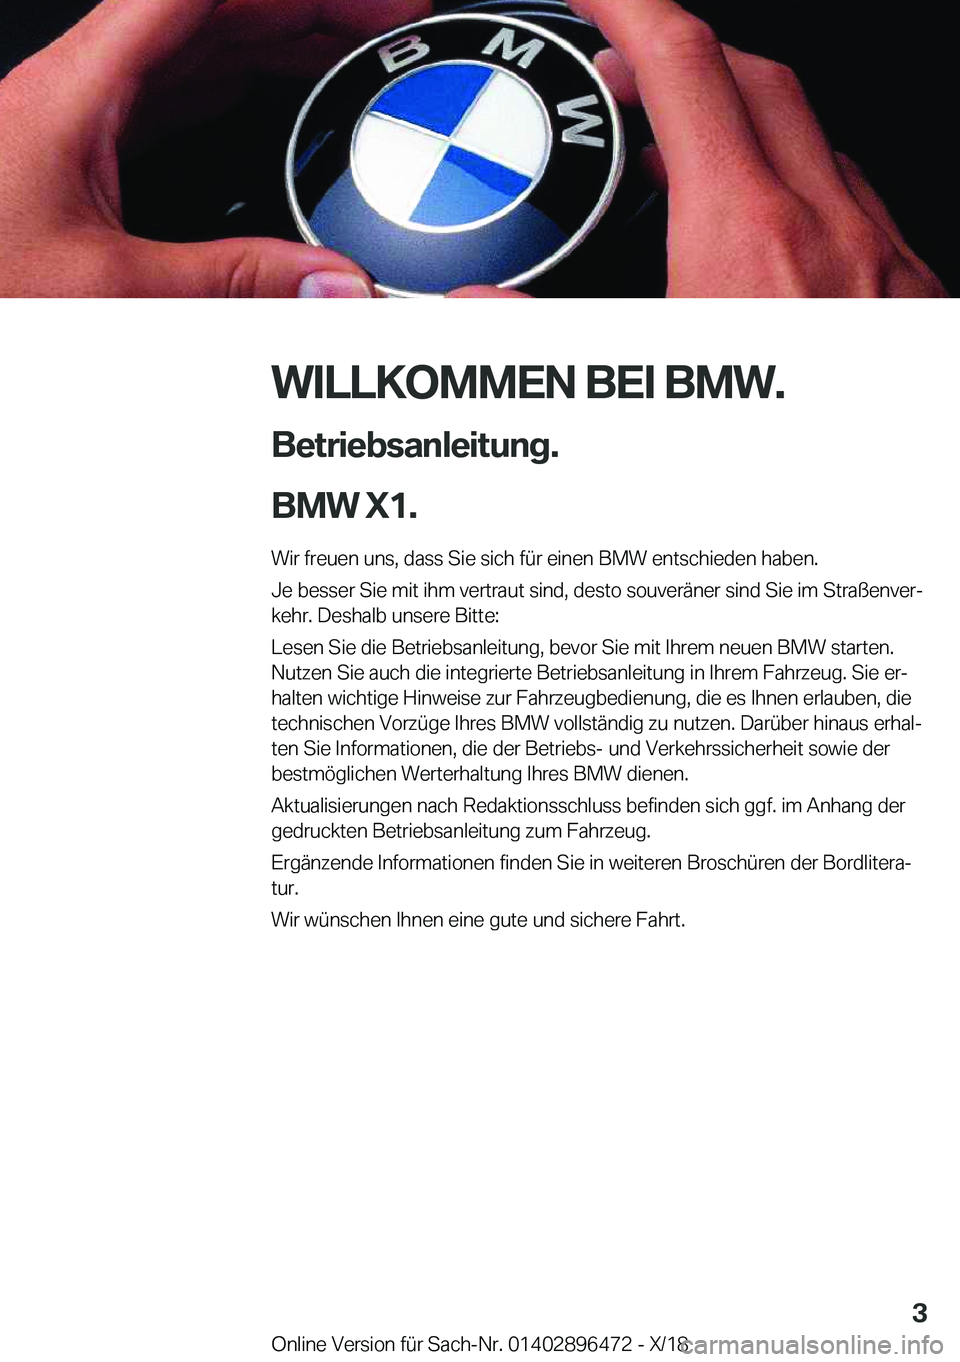 BMW X1 2019  Betriebsanleitungen (in German) �W�I�L�L�K�O�M�M�E�N��B�E�I��B�M�W�.�B�e�t�r�i�e�b�s�a�n�l�e�i�t�u�n�g�.
�B�M�W��X�1�. �W�i�r��f�r�e�u�e�n��u�n�s�,��d�a�s�s��S�i�e��s�i�c�h��f�